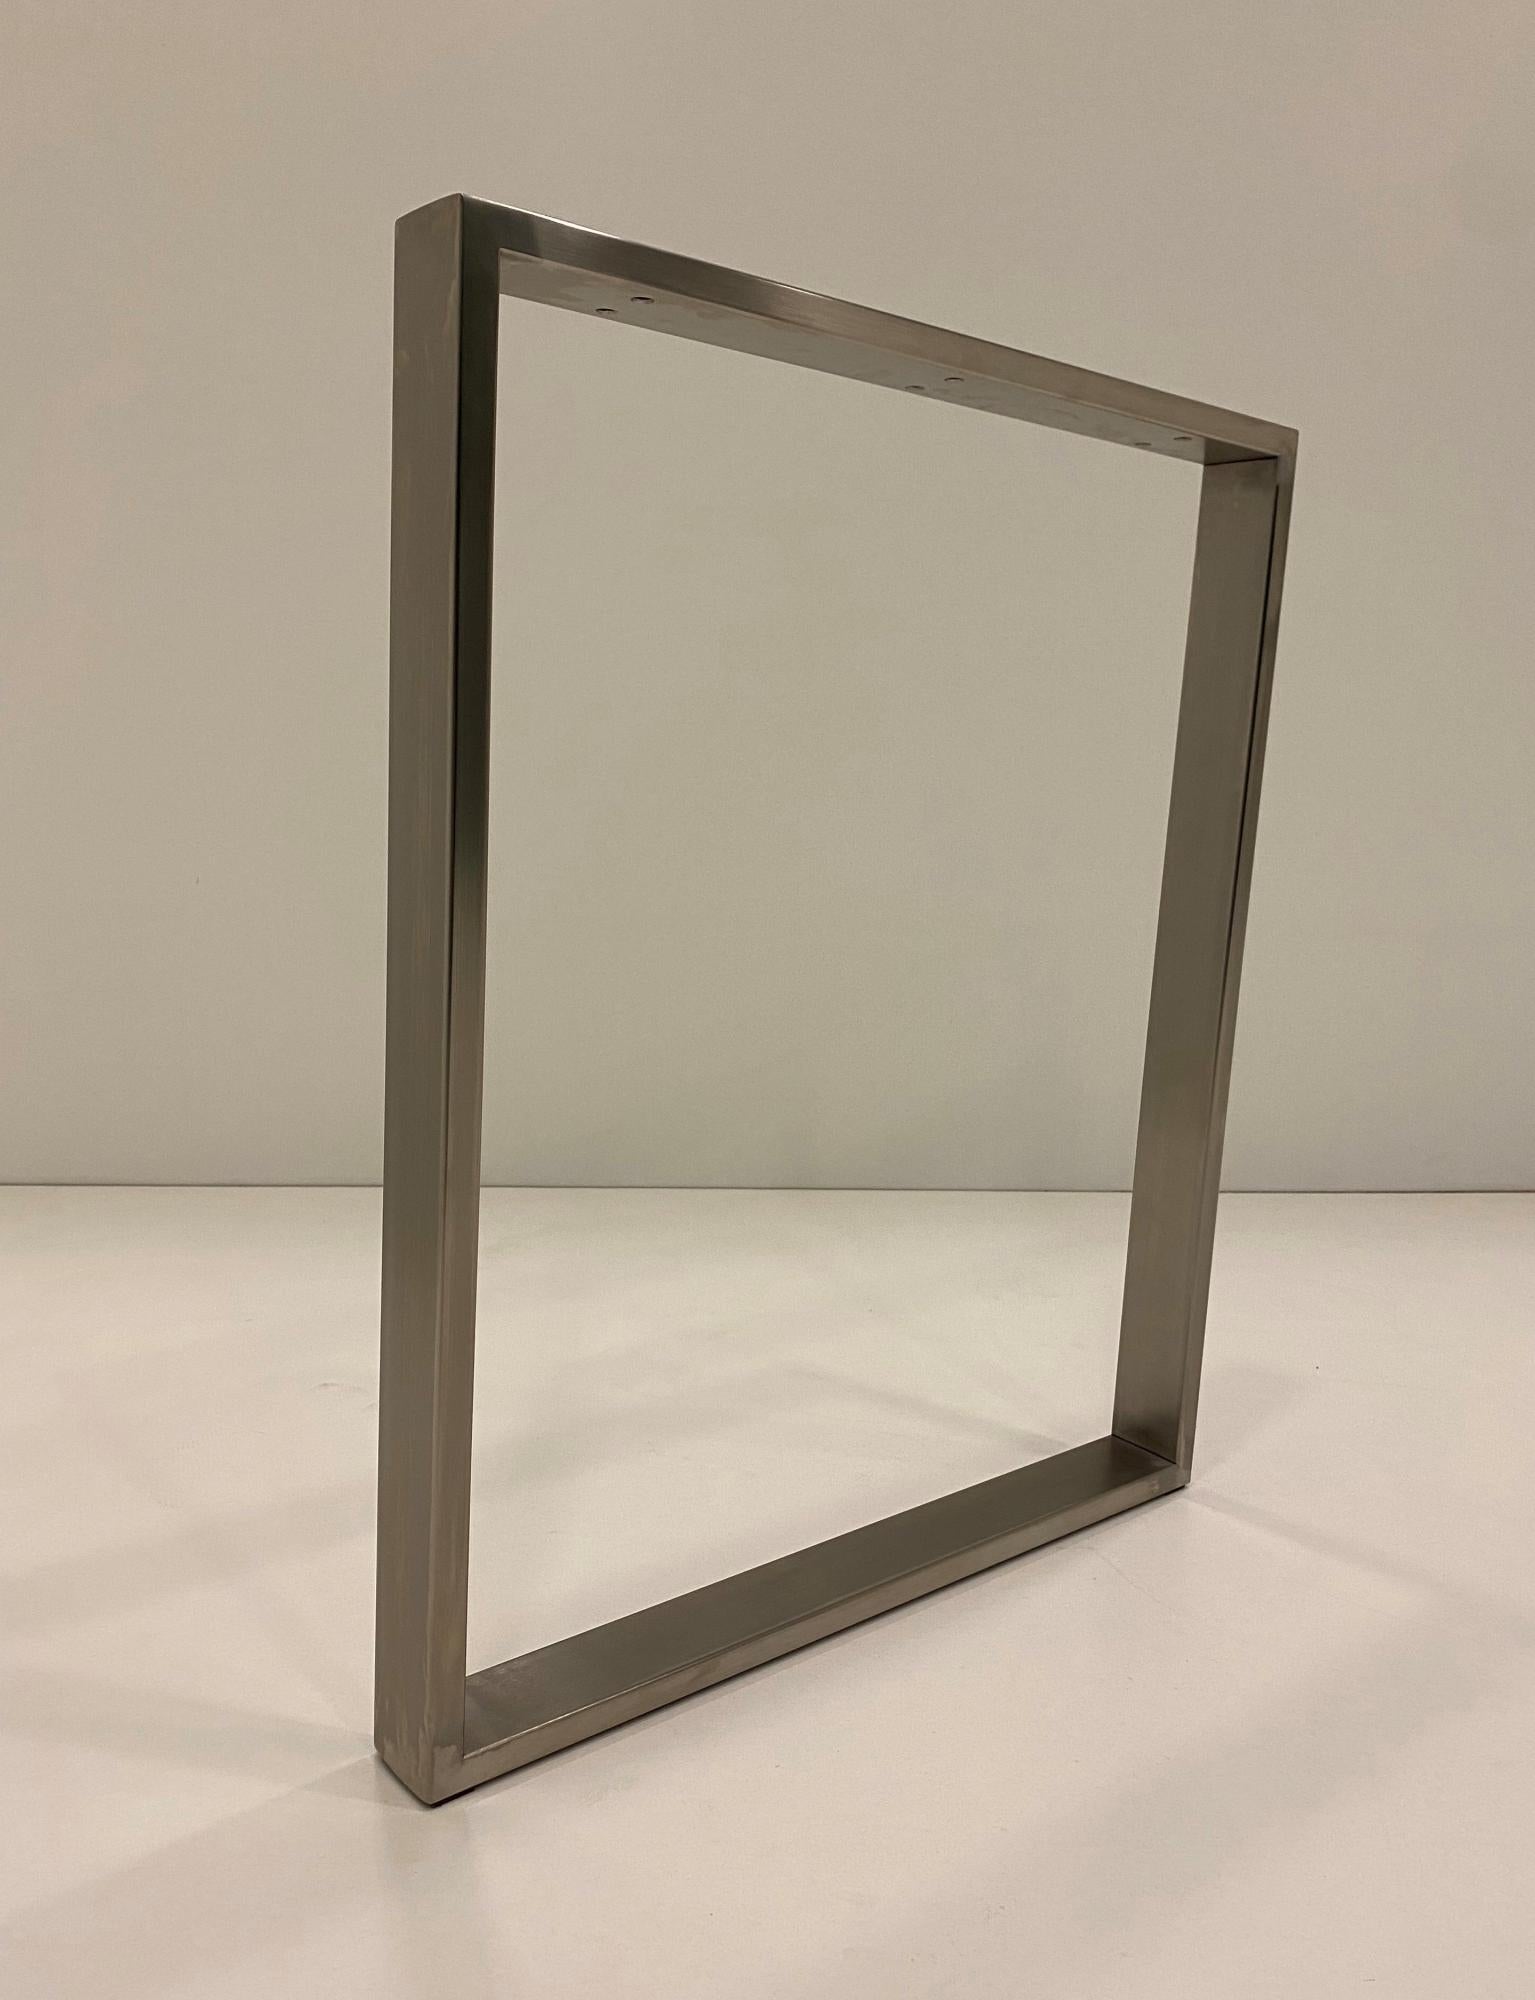 Pata fija rectangular de acero inoxidable mate para mesa 60 x 72 cm